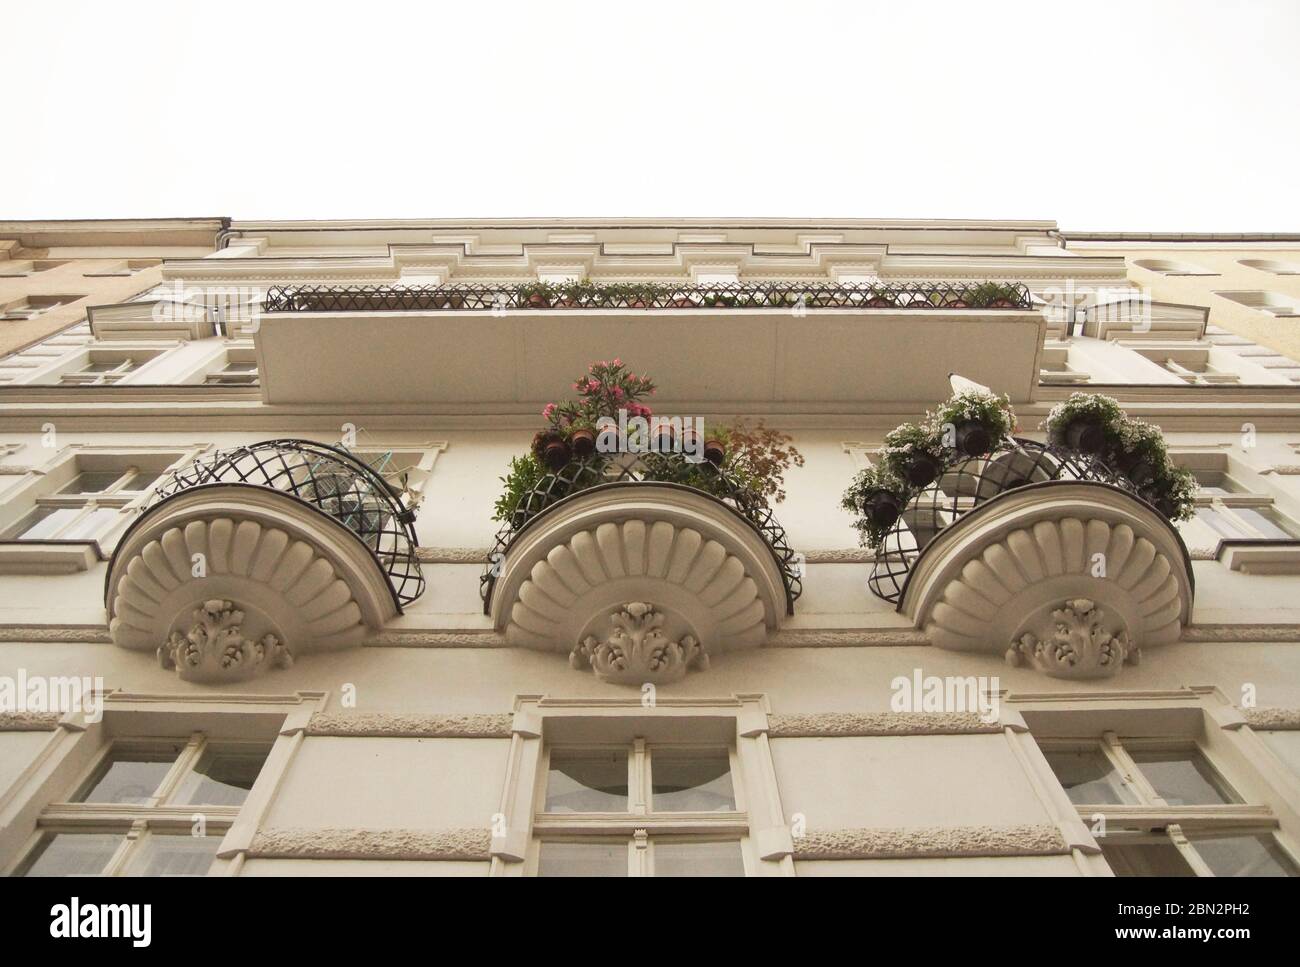 Berliner Historismusfassade von Unten mit halbrunden Balkonen Foto Stock